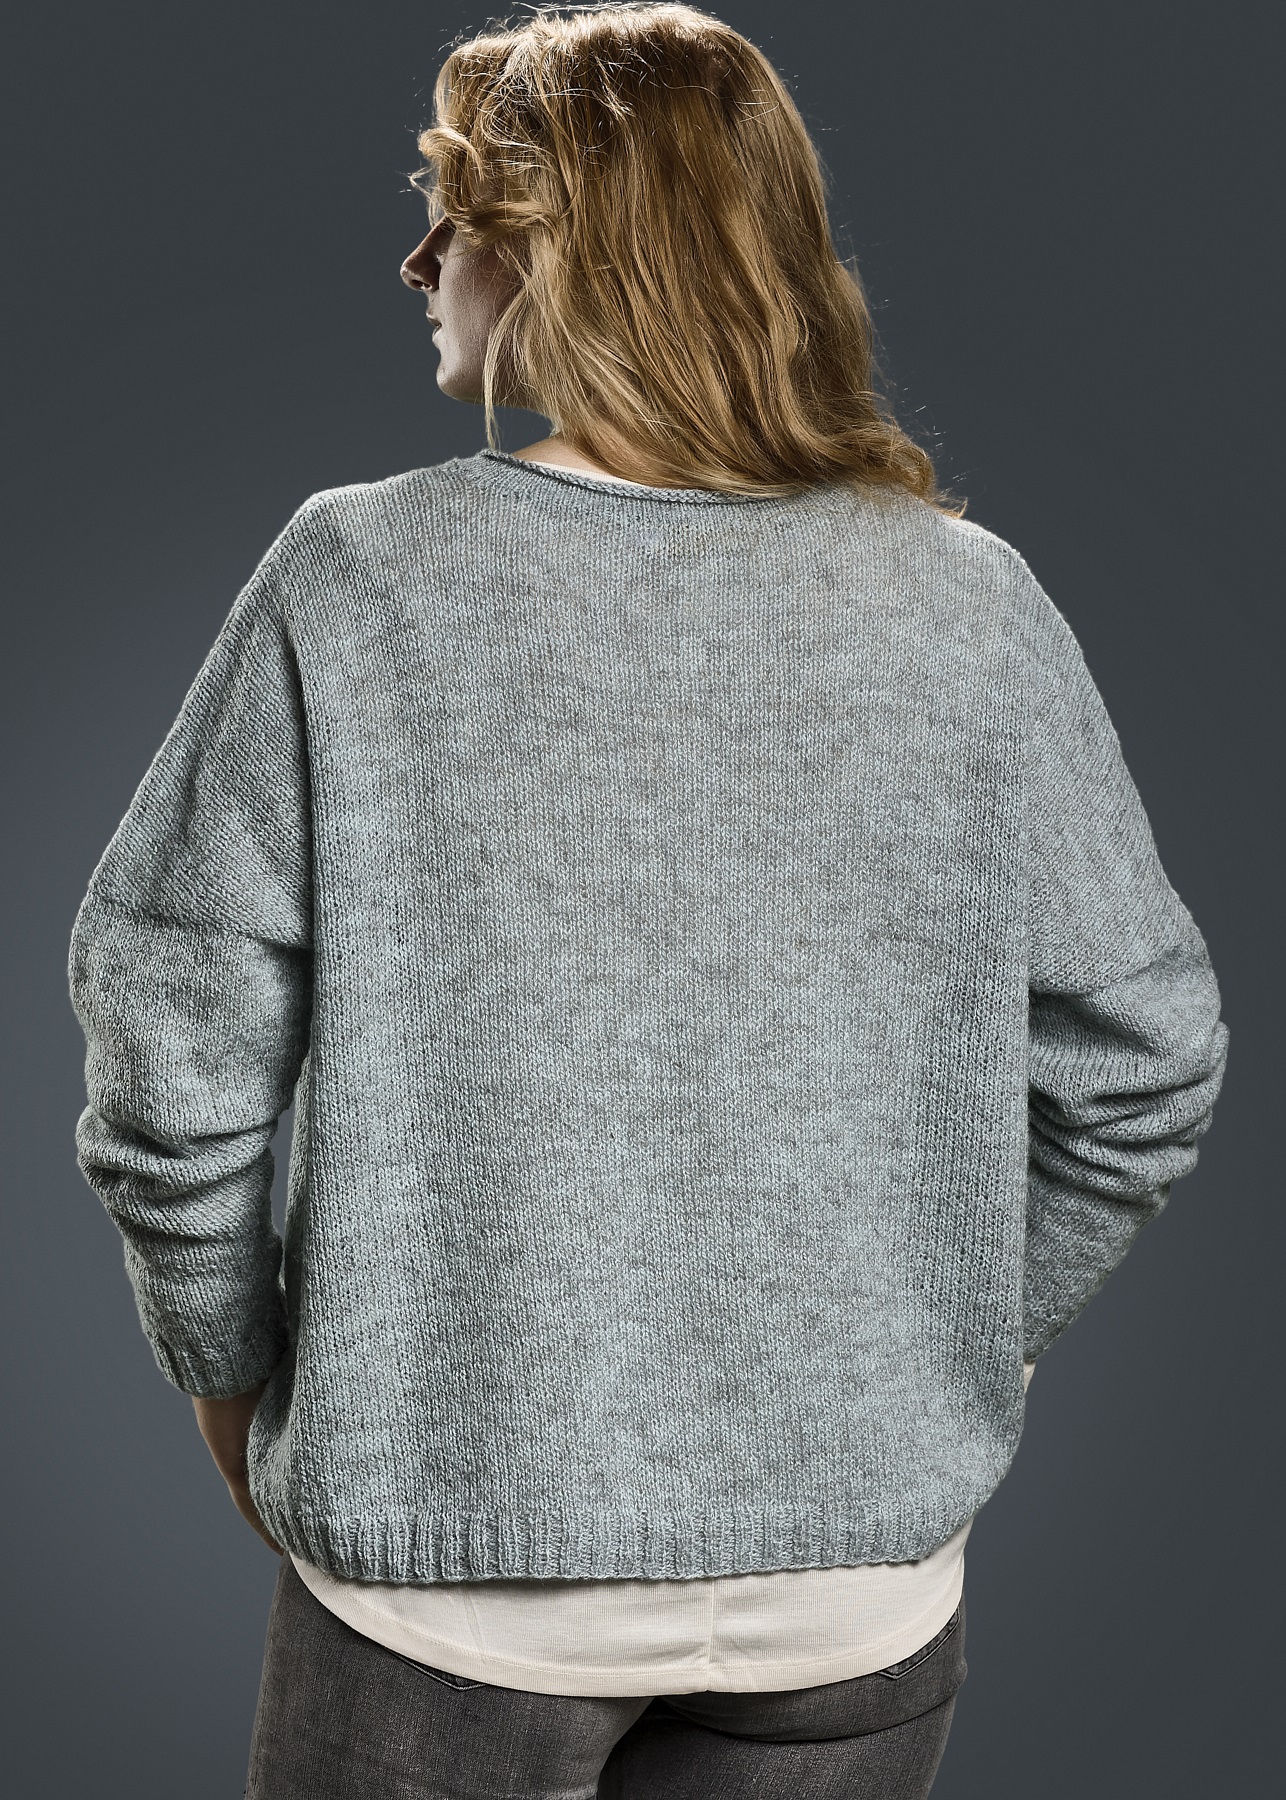 Butterfly sweater - Designer Sanne Fjalland